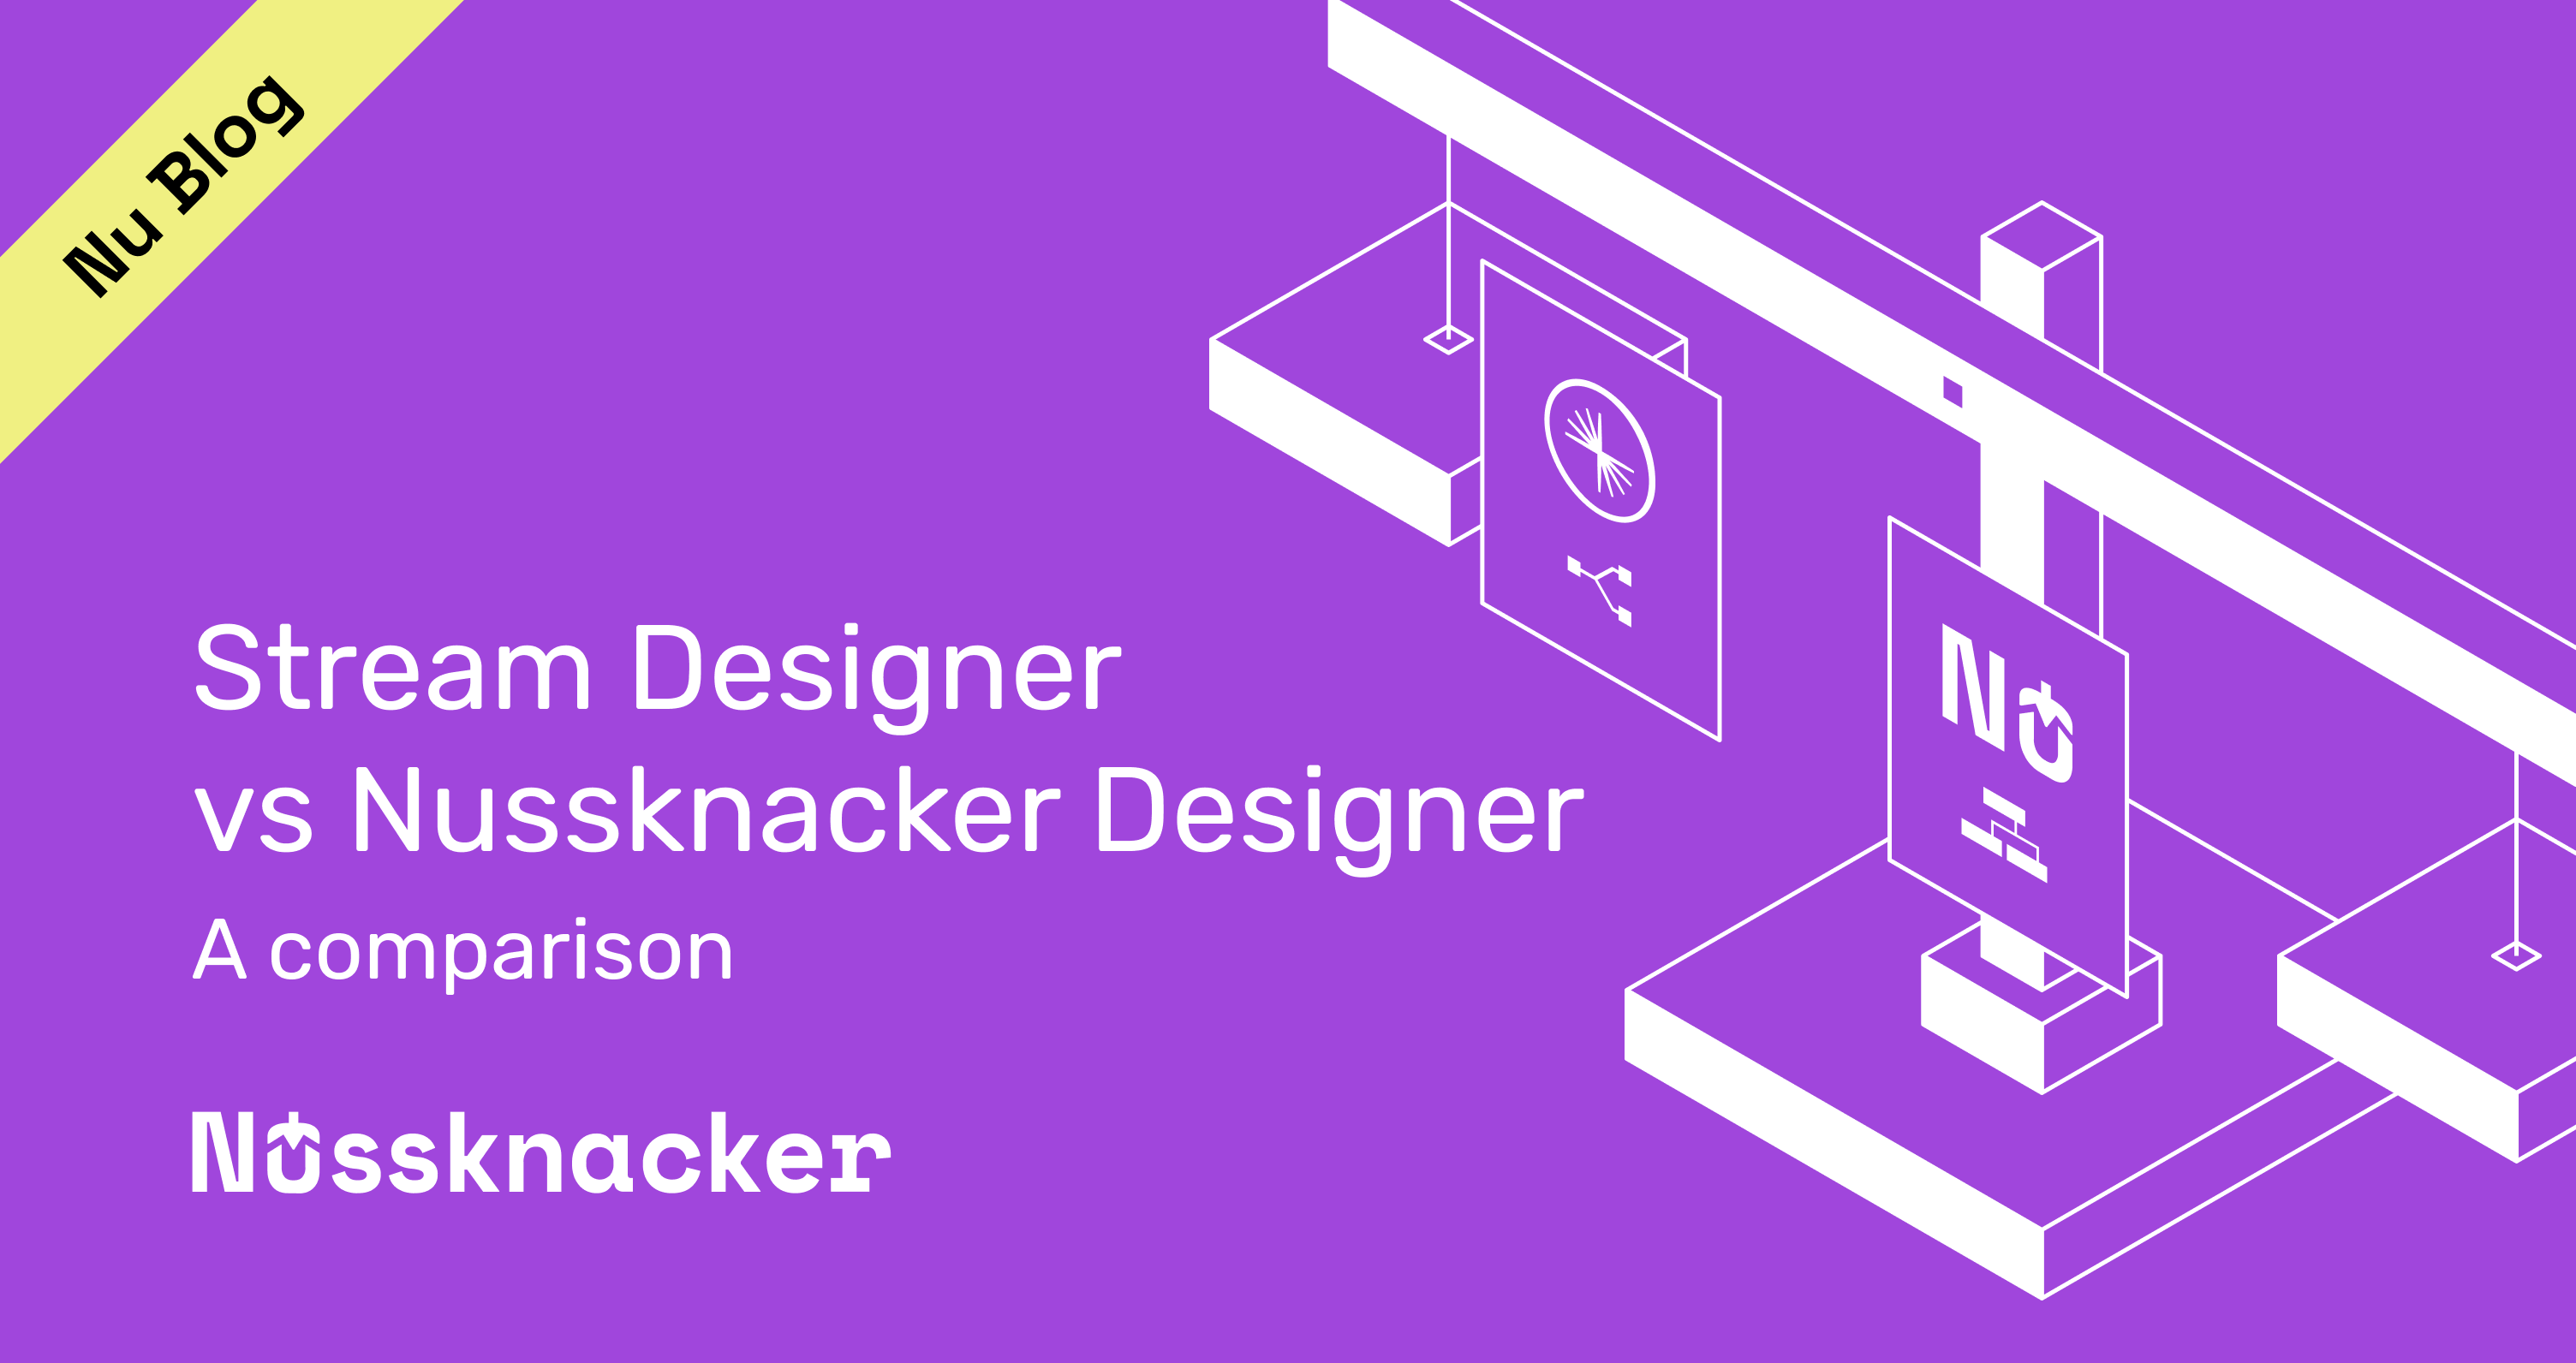 Confluent Strean Designer Compared to Nussknacker Alternative